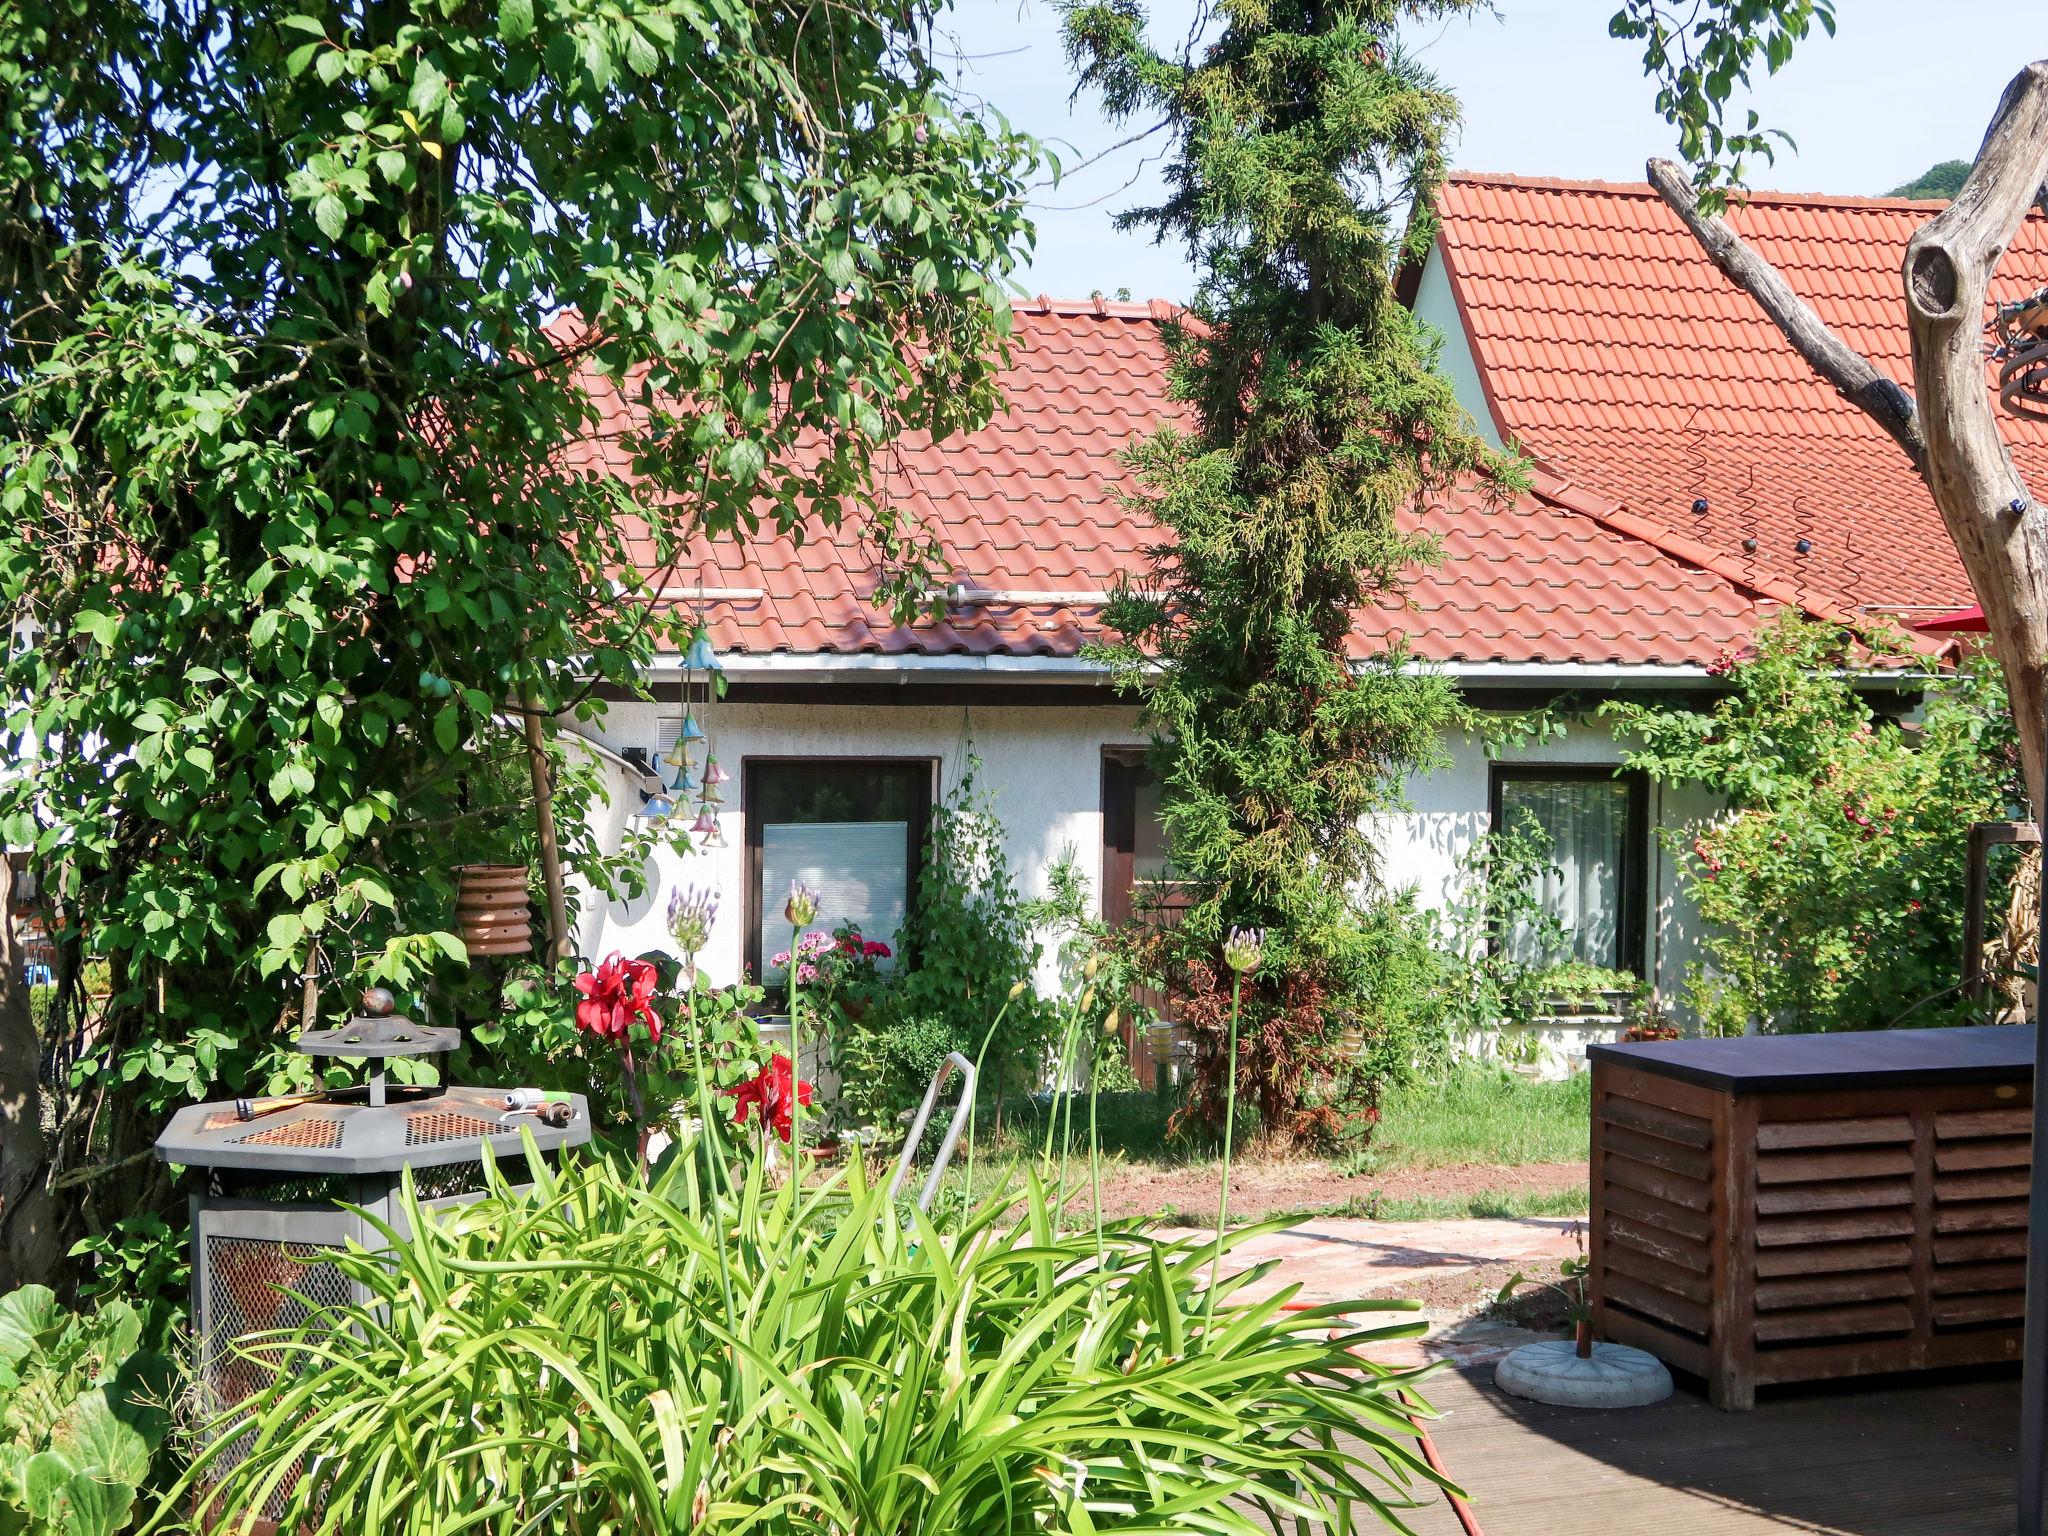 Photo 1 - House in Kaltennordheim with garden and mountain view